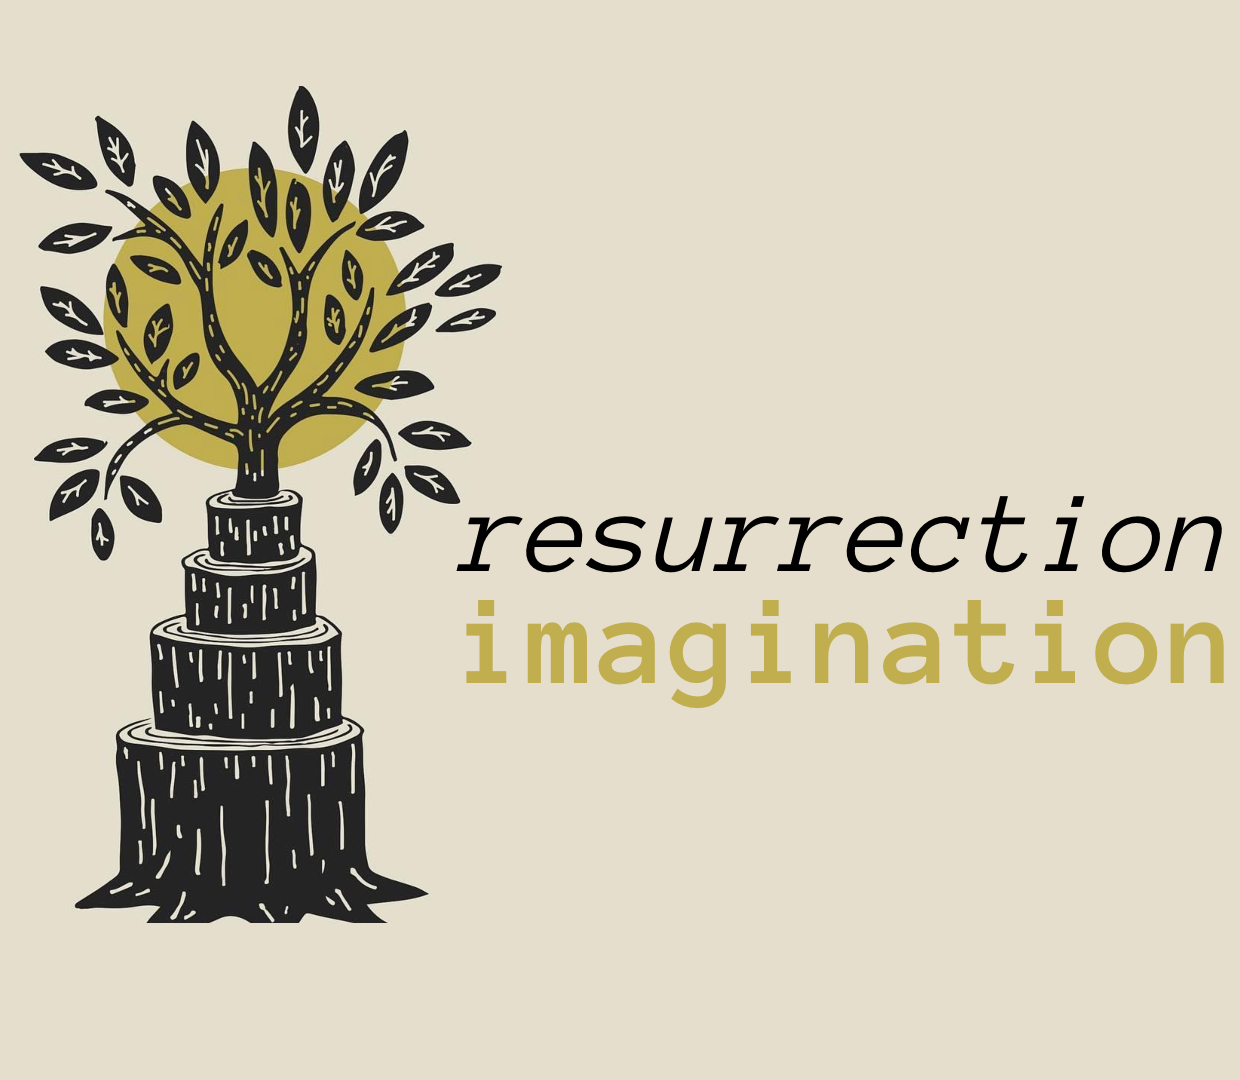 Ryan Post - "Resurrection Imagination"